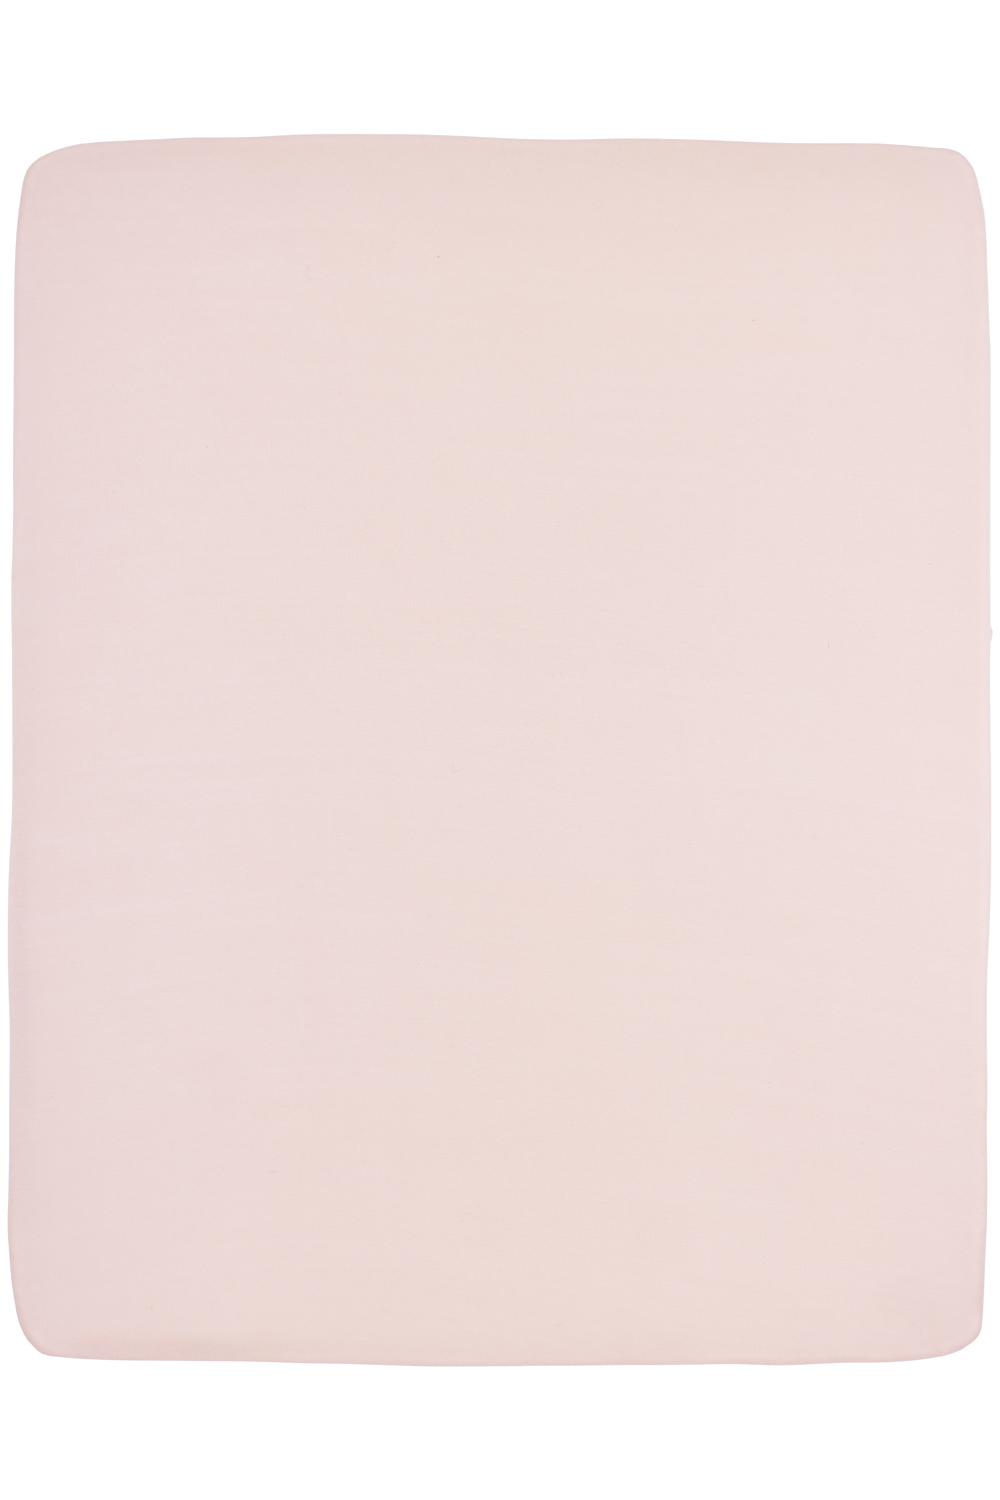 Jersey Hoeslaken Boxmatras - Soft Pink - 75x95cm